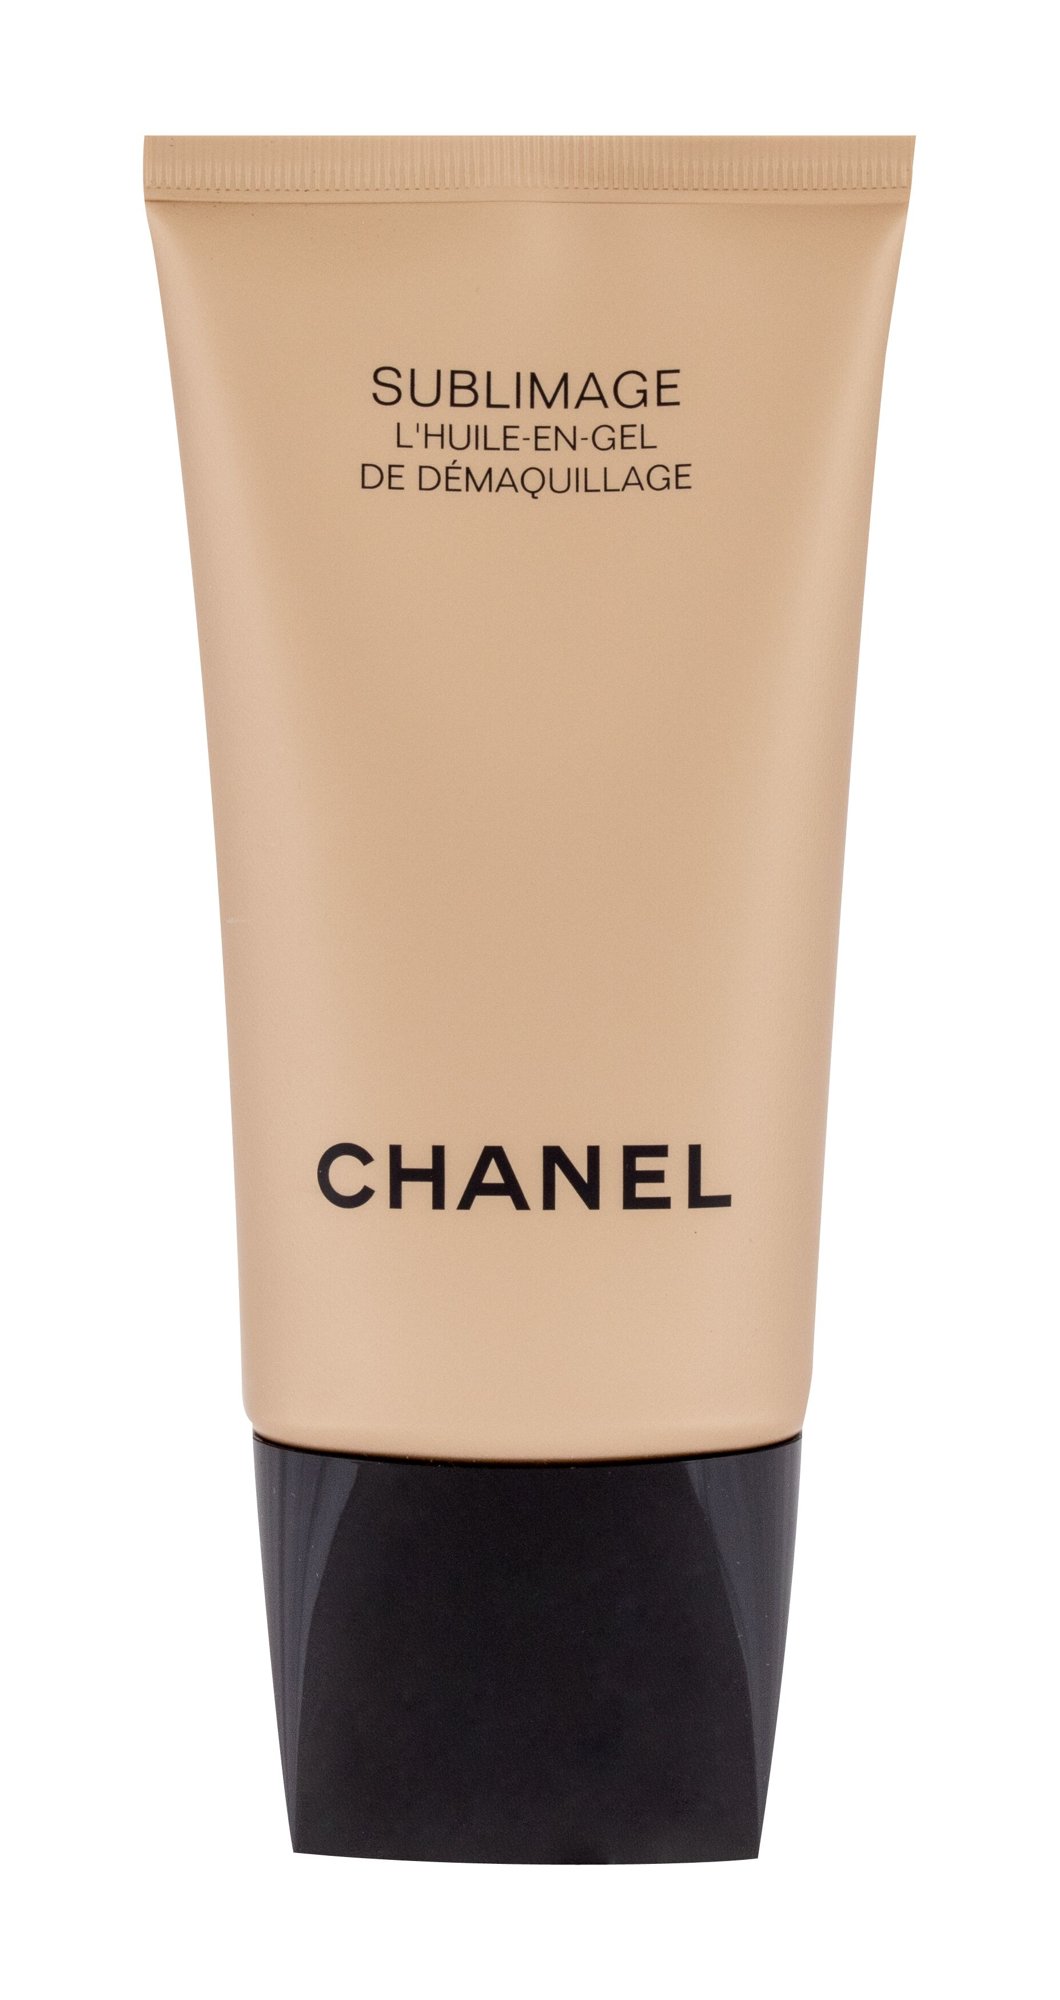 Chanel Sublimage Ultimate Comfort veido gelis